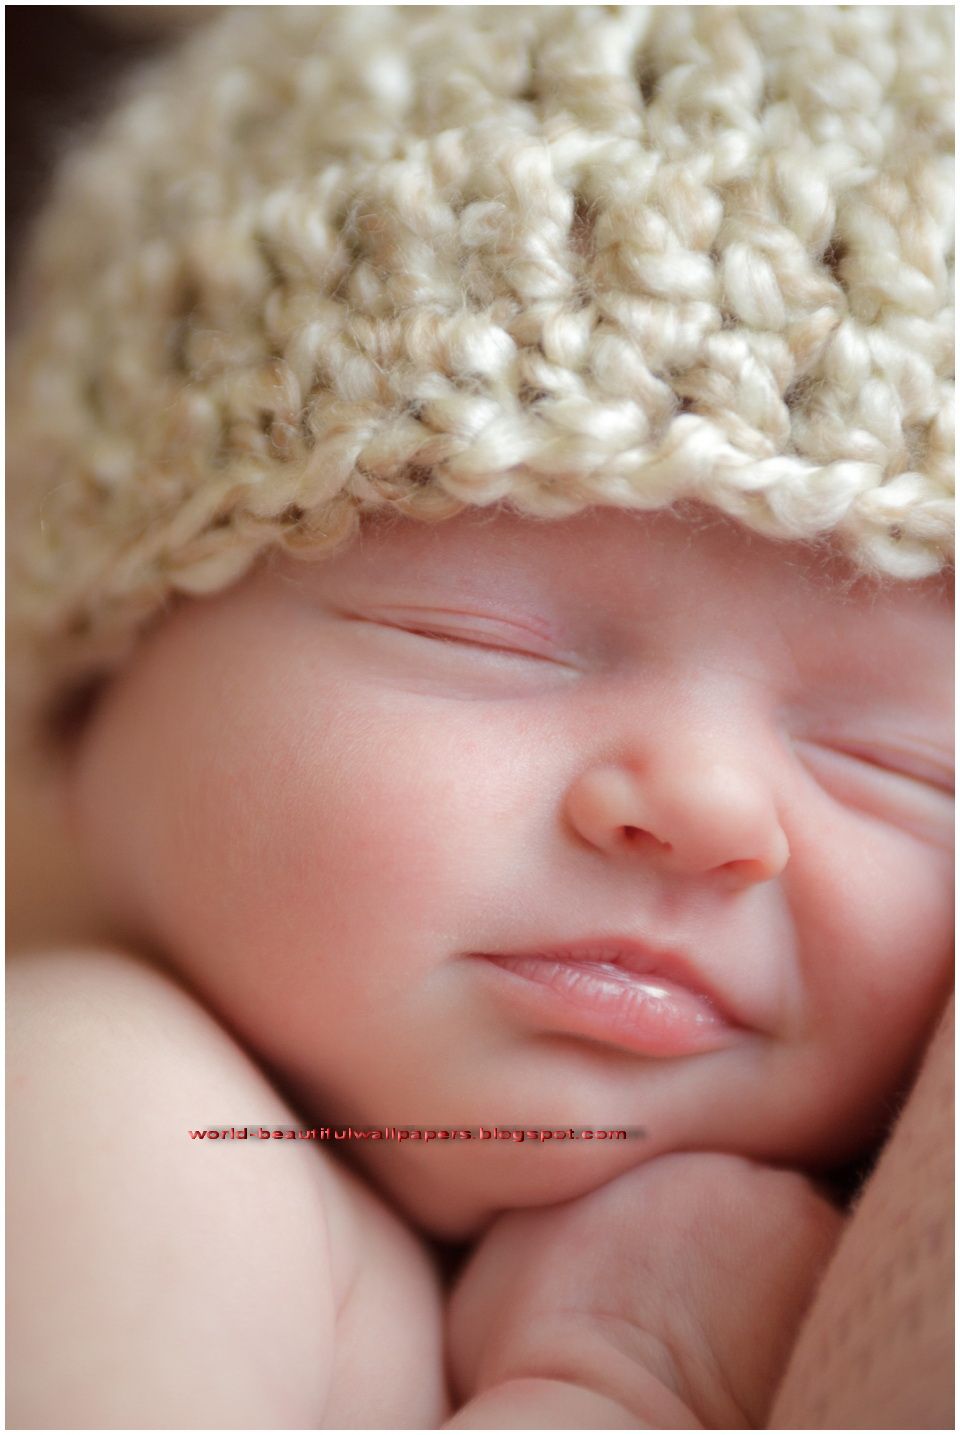 Newborn Baby Wallpaper